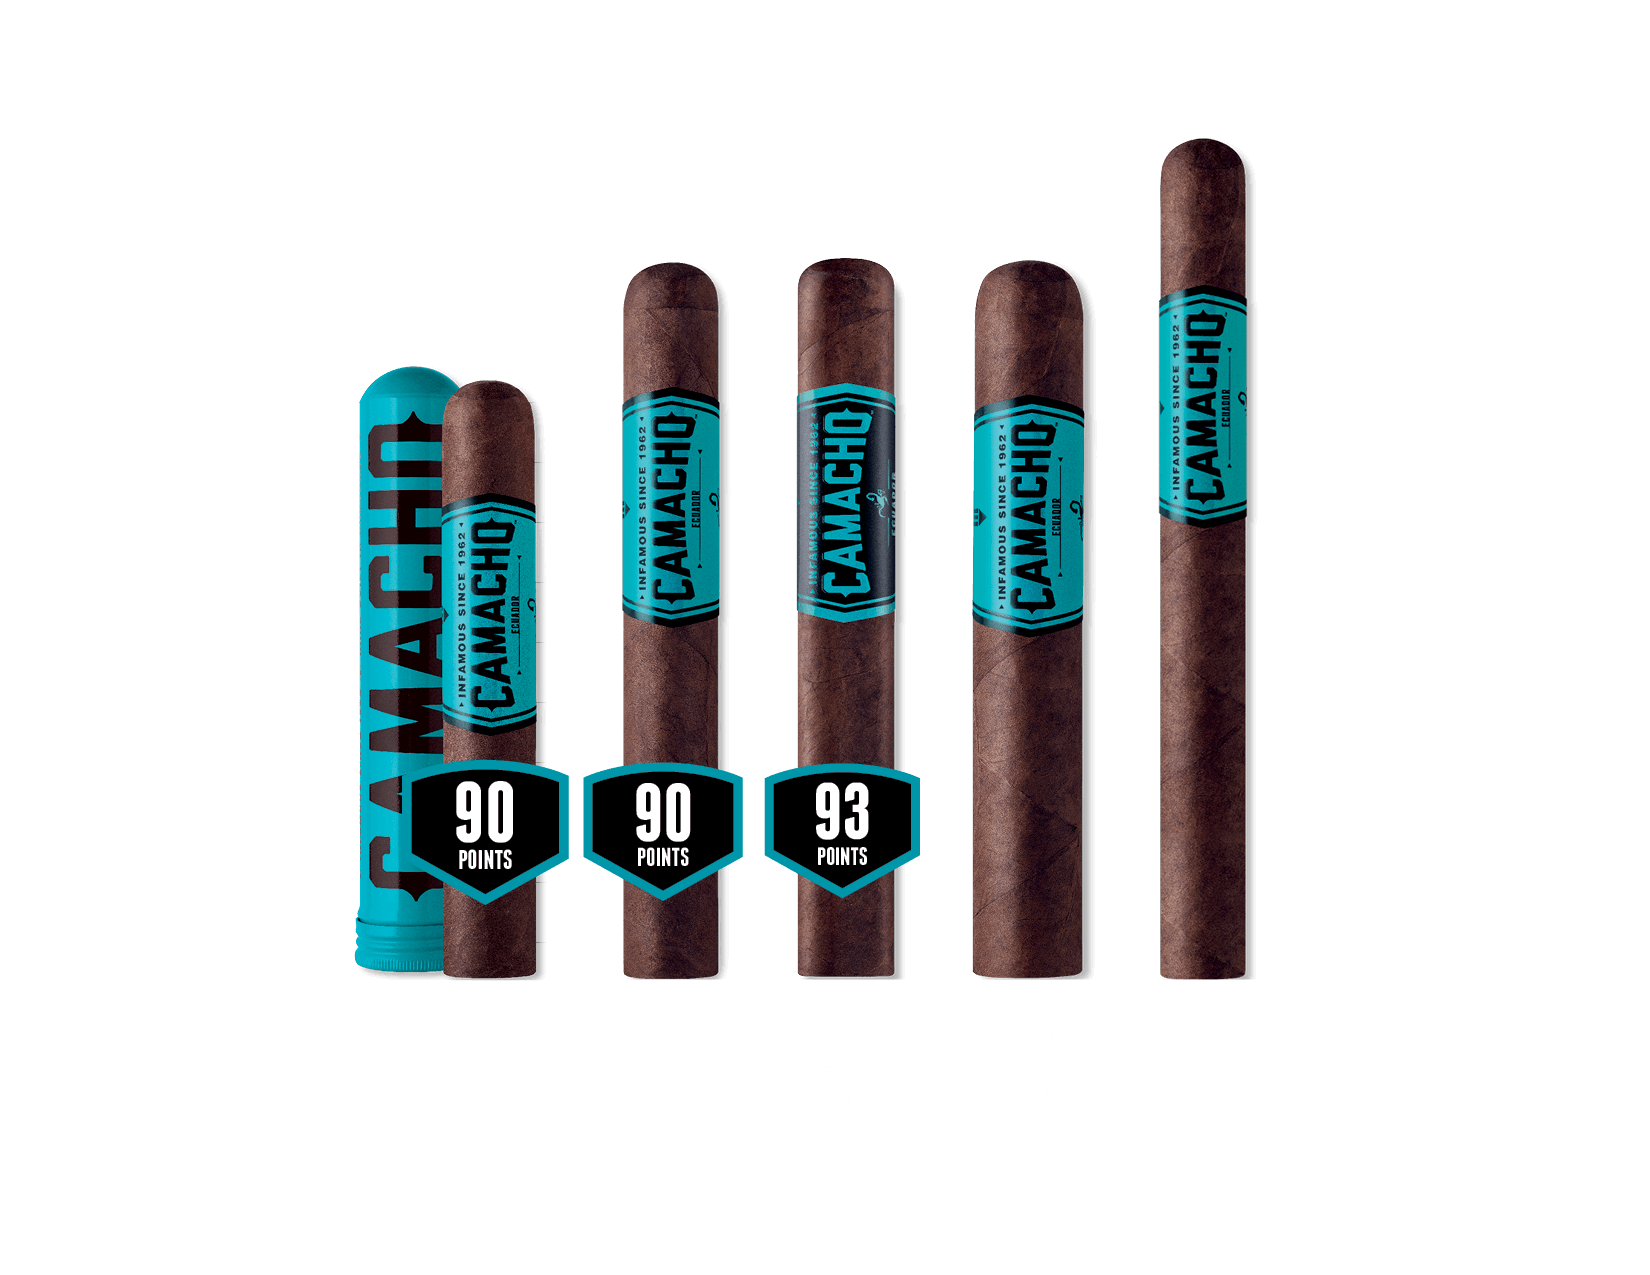 Camacho Ecuador cigar lineup